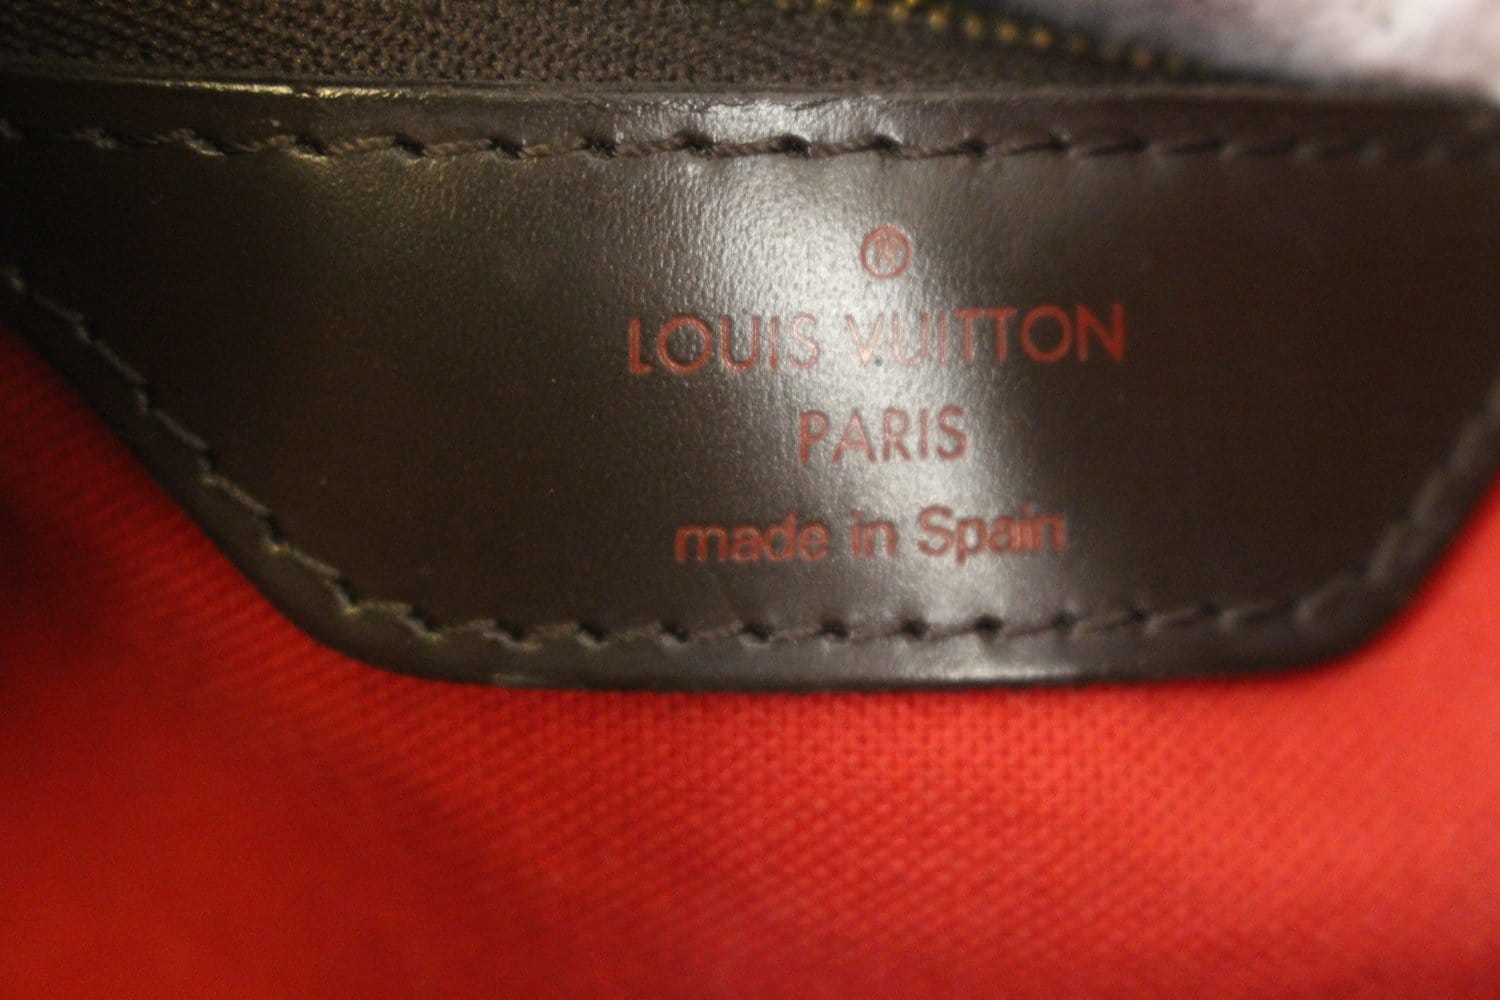 Louis Vuitton Cabas Rivington Damier Ebene Tote Bag – Mills Jewelers & Loan